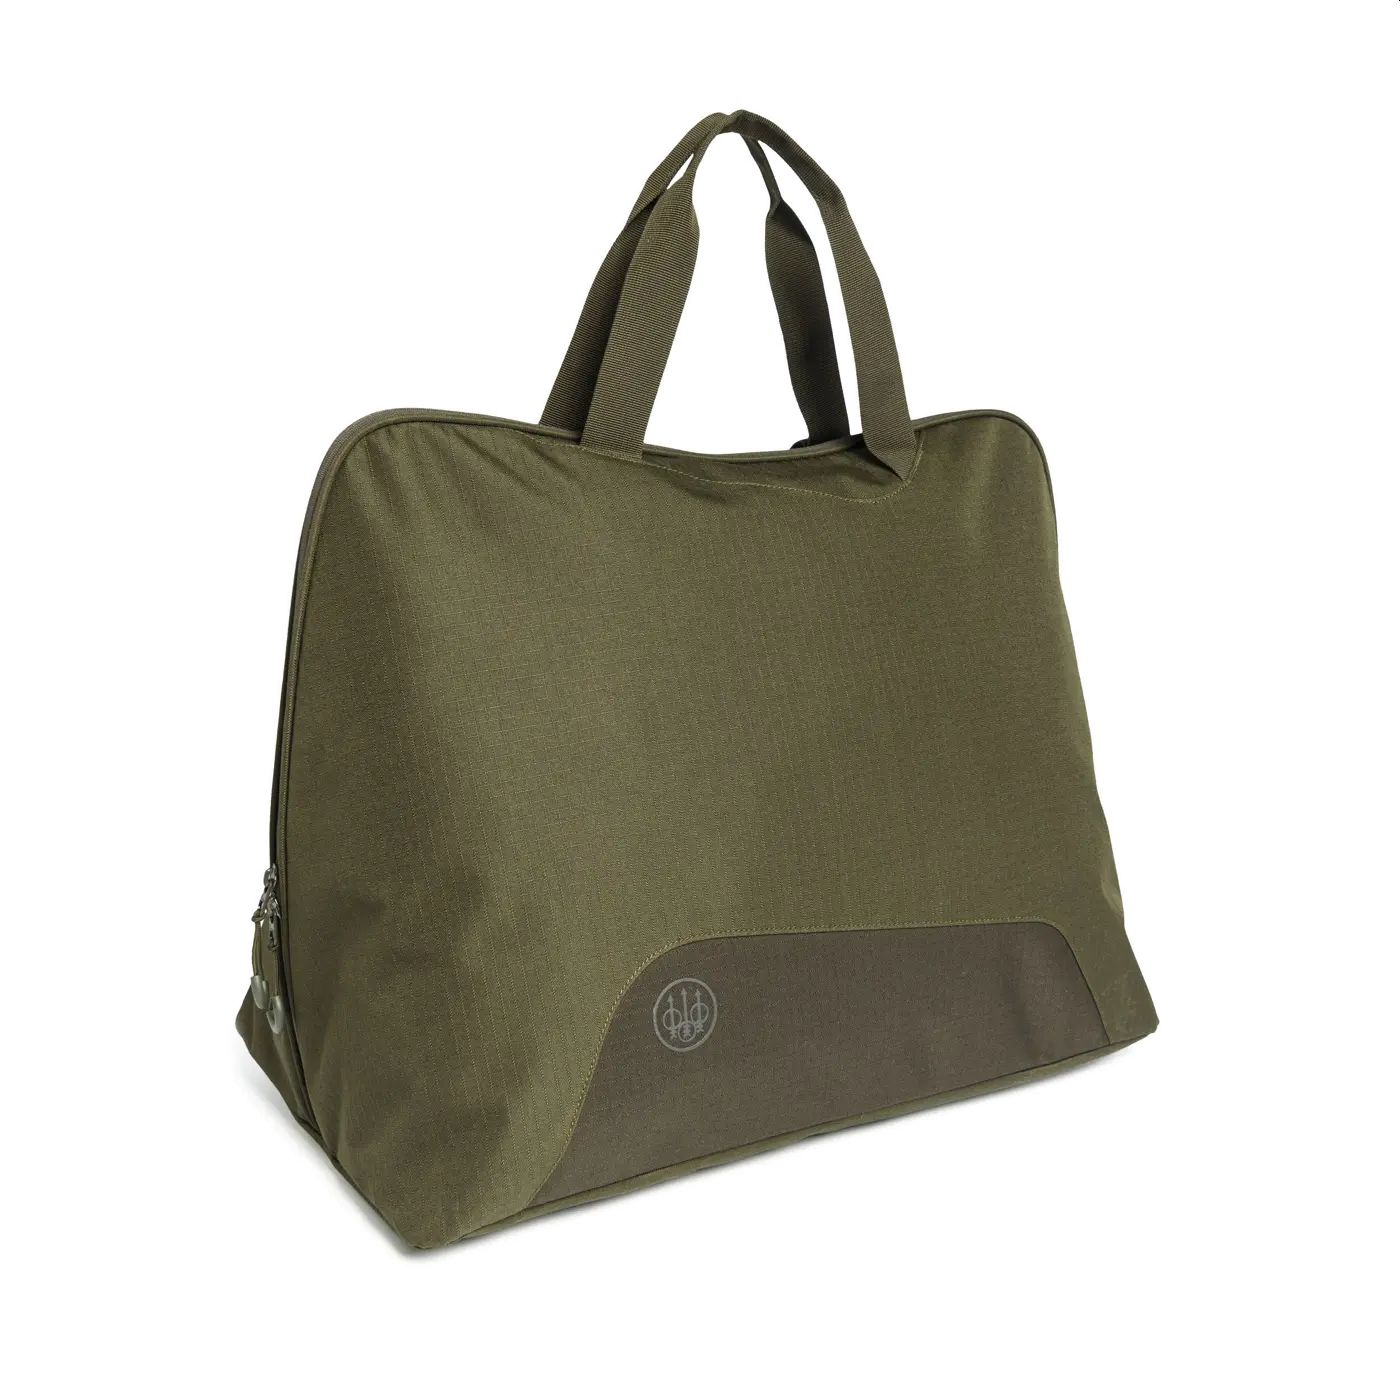 Beretta Tasche grün Game Keeper Bag EVO